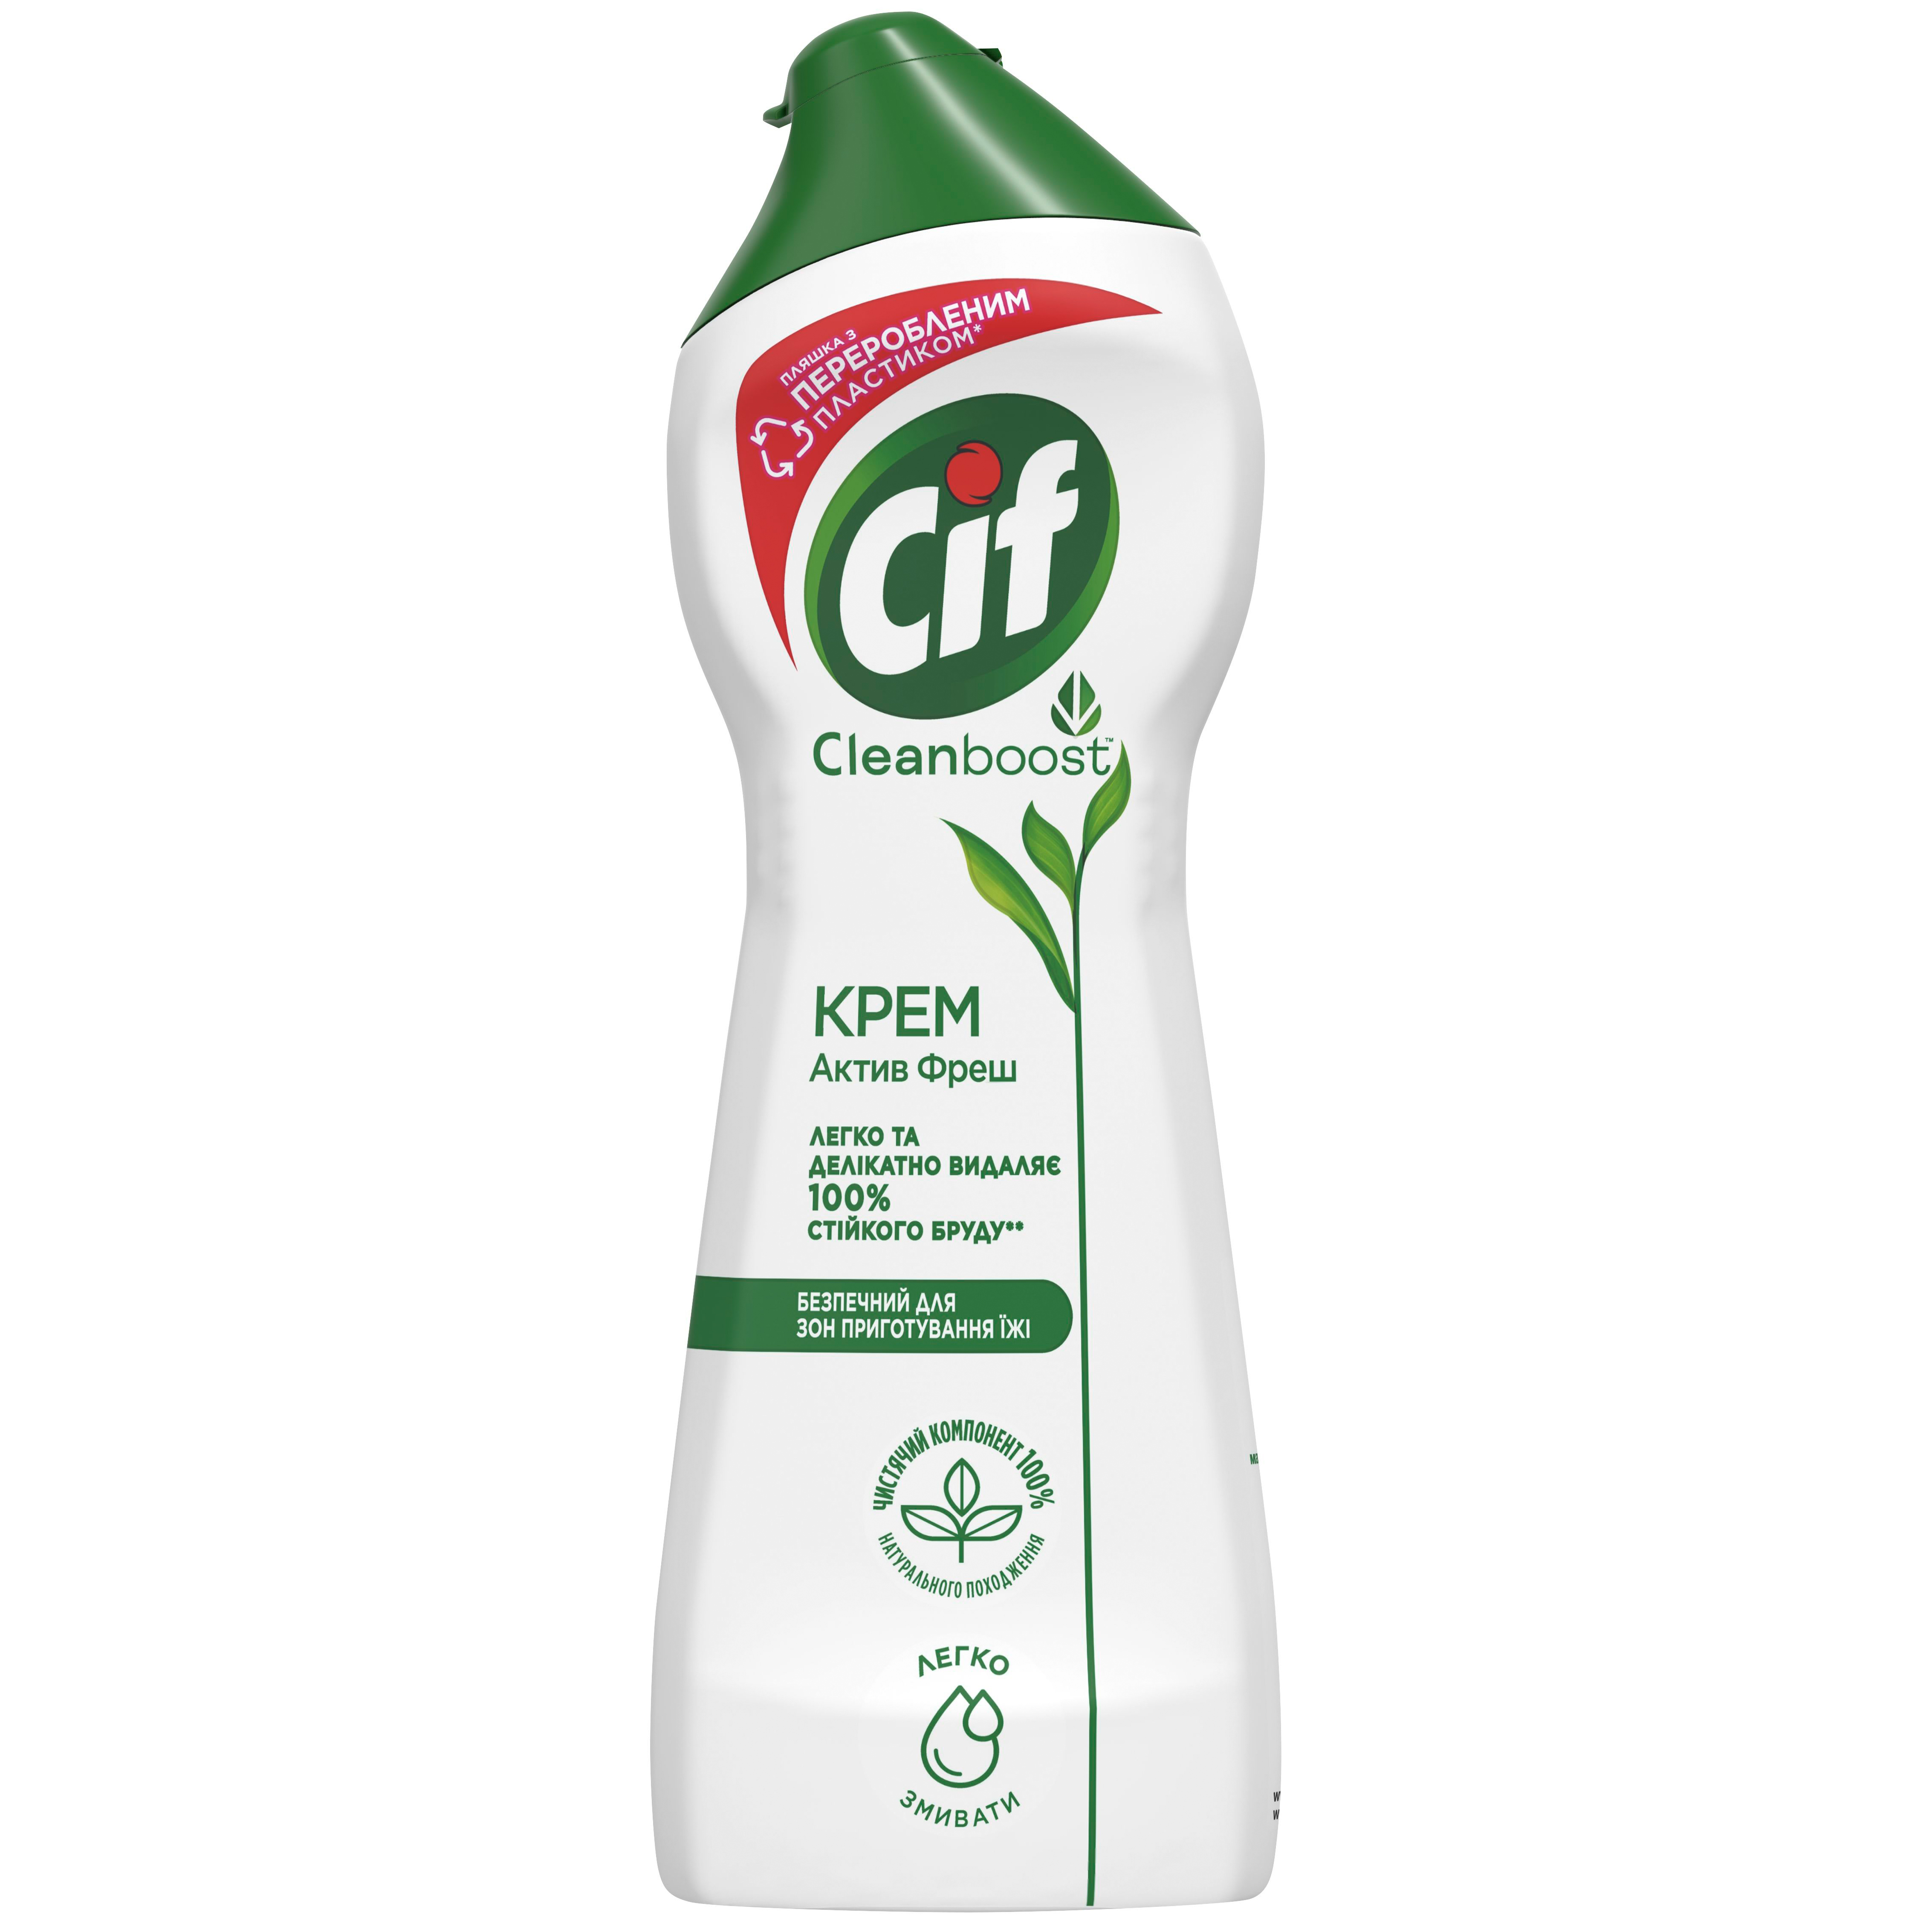 Крем для чистки Cif Clean Boost Актив Фреш, 250 мл - фото 1